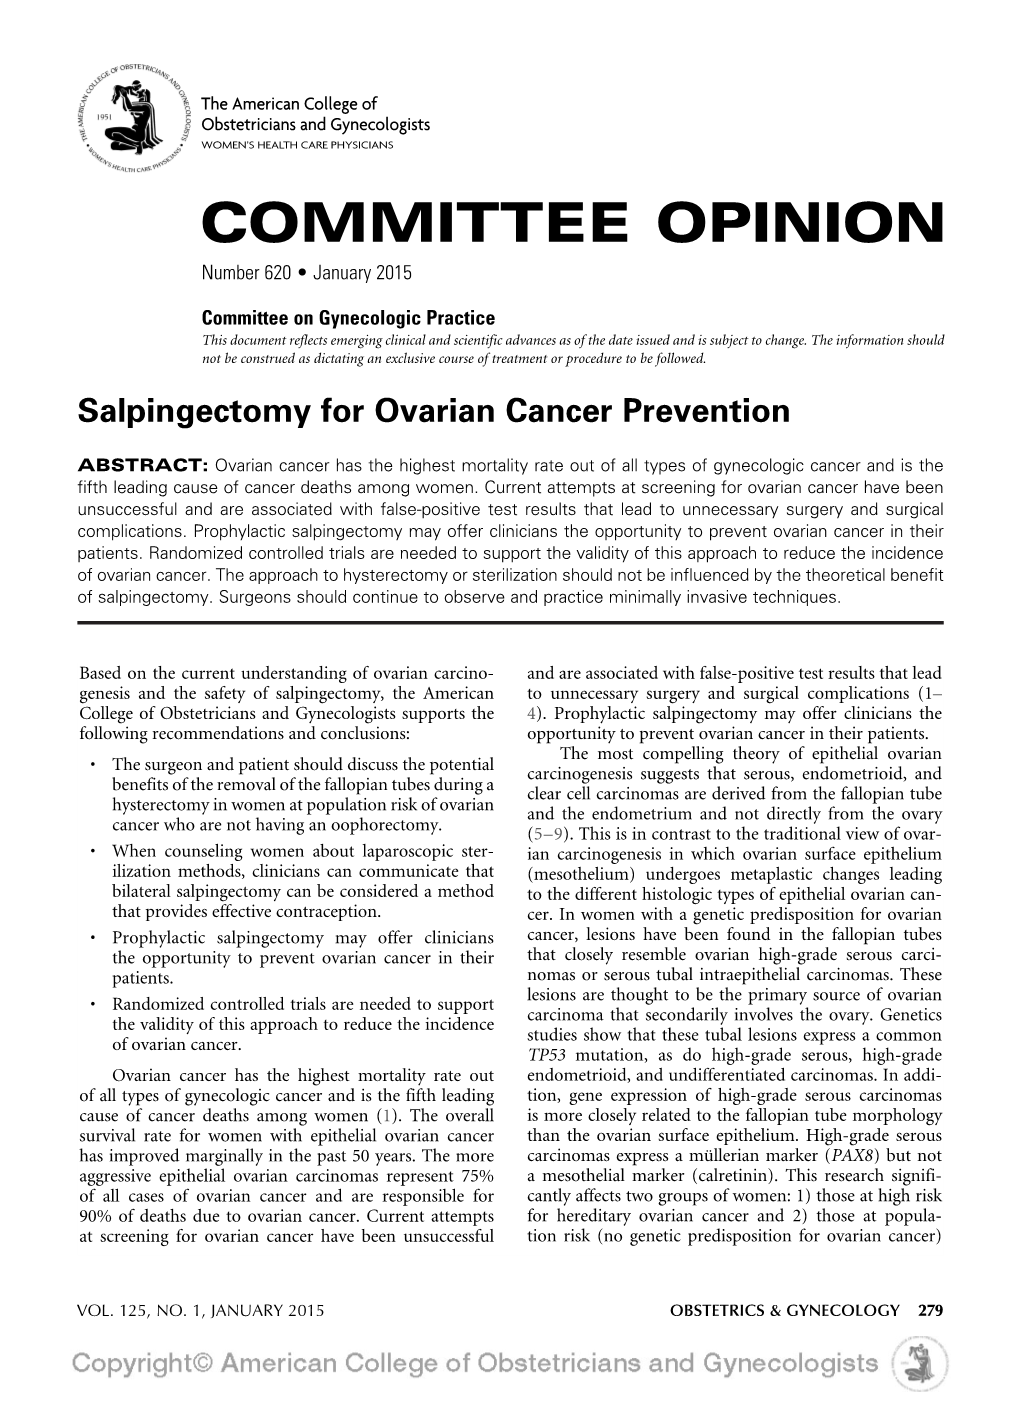 Salpingectomy for Ovarian Cancer Prevention